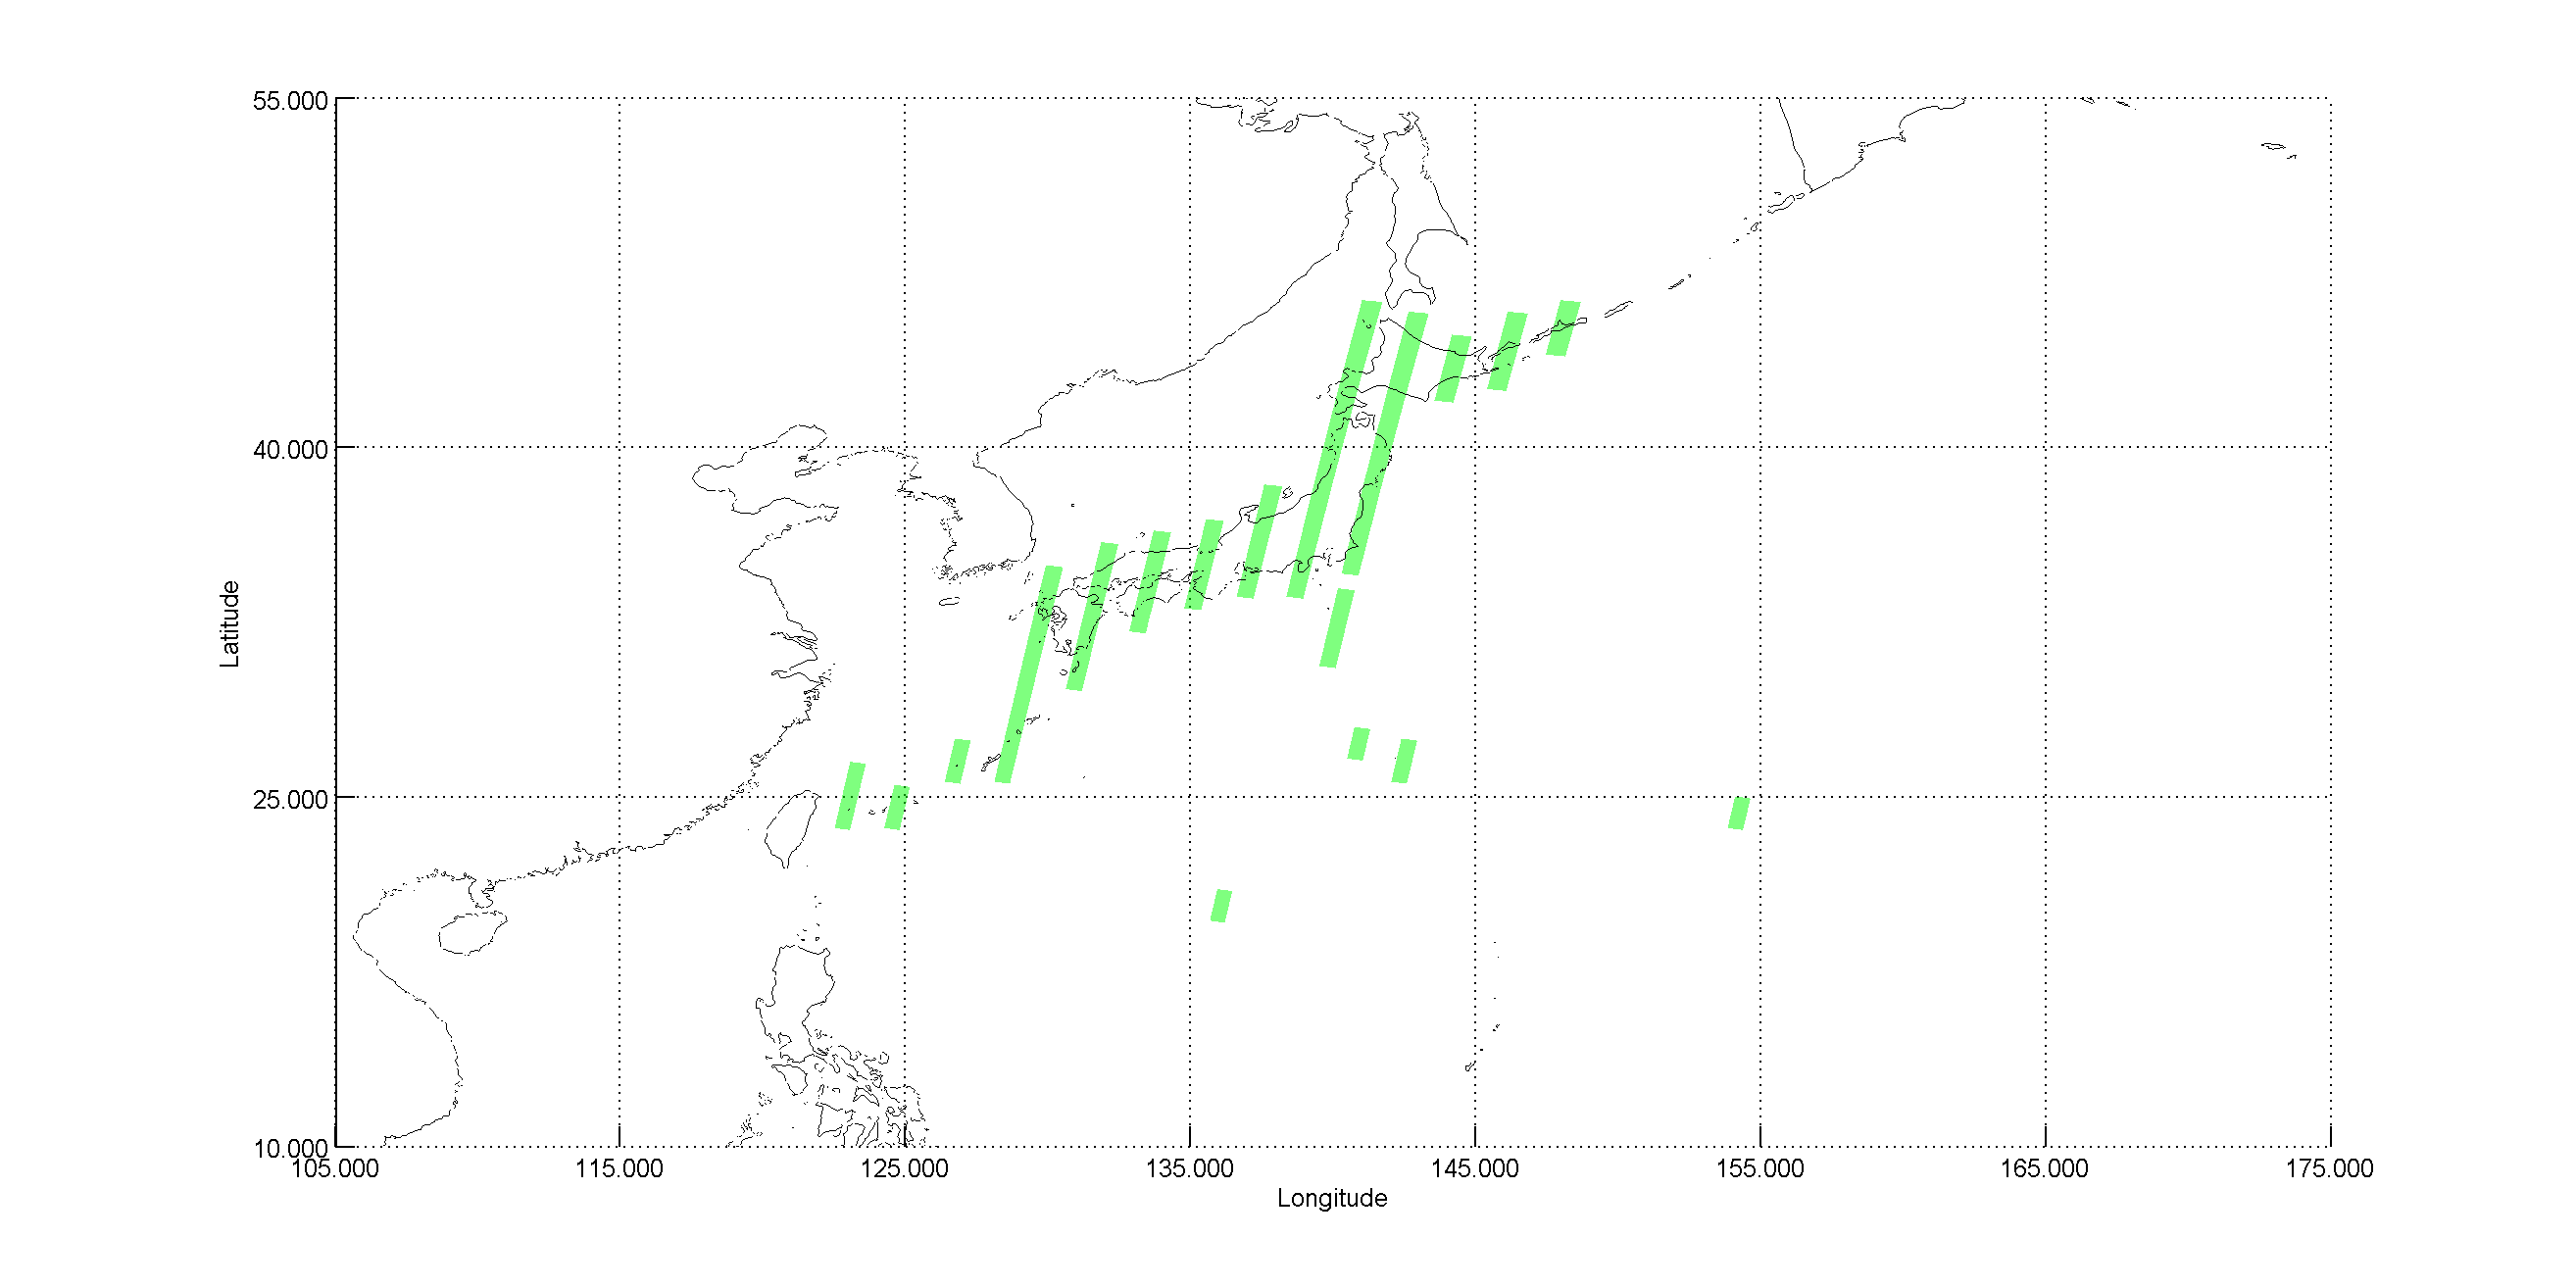 CYCLE_149 - Japan Descending passes